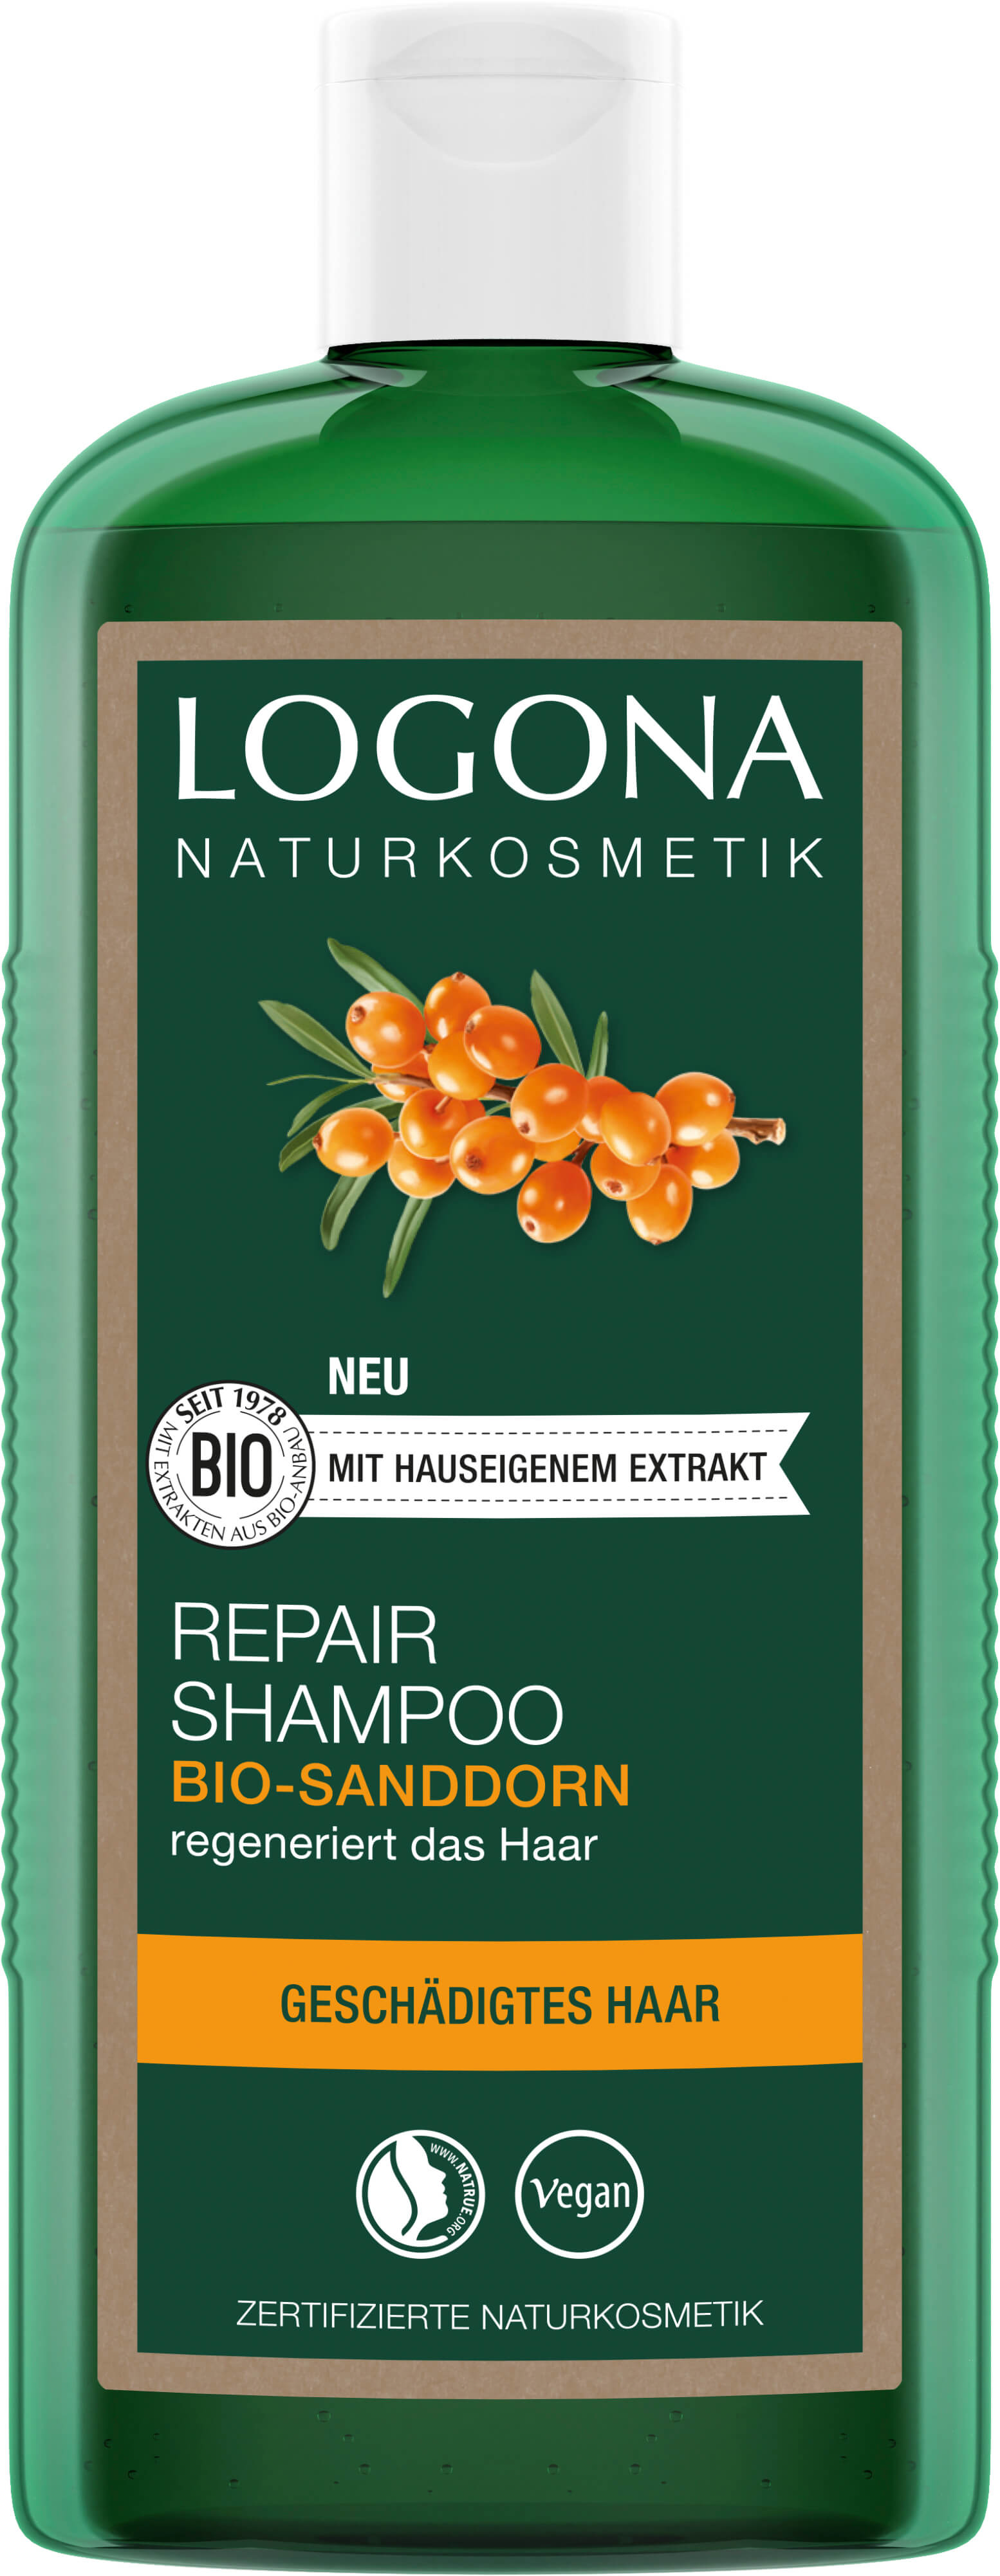 Repair & Pflege Shampoo Naturkosmetik LOGONA Bio-Sanddorn 